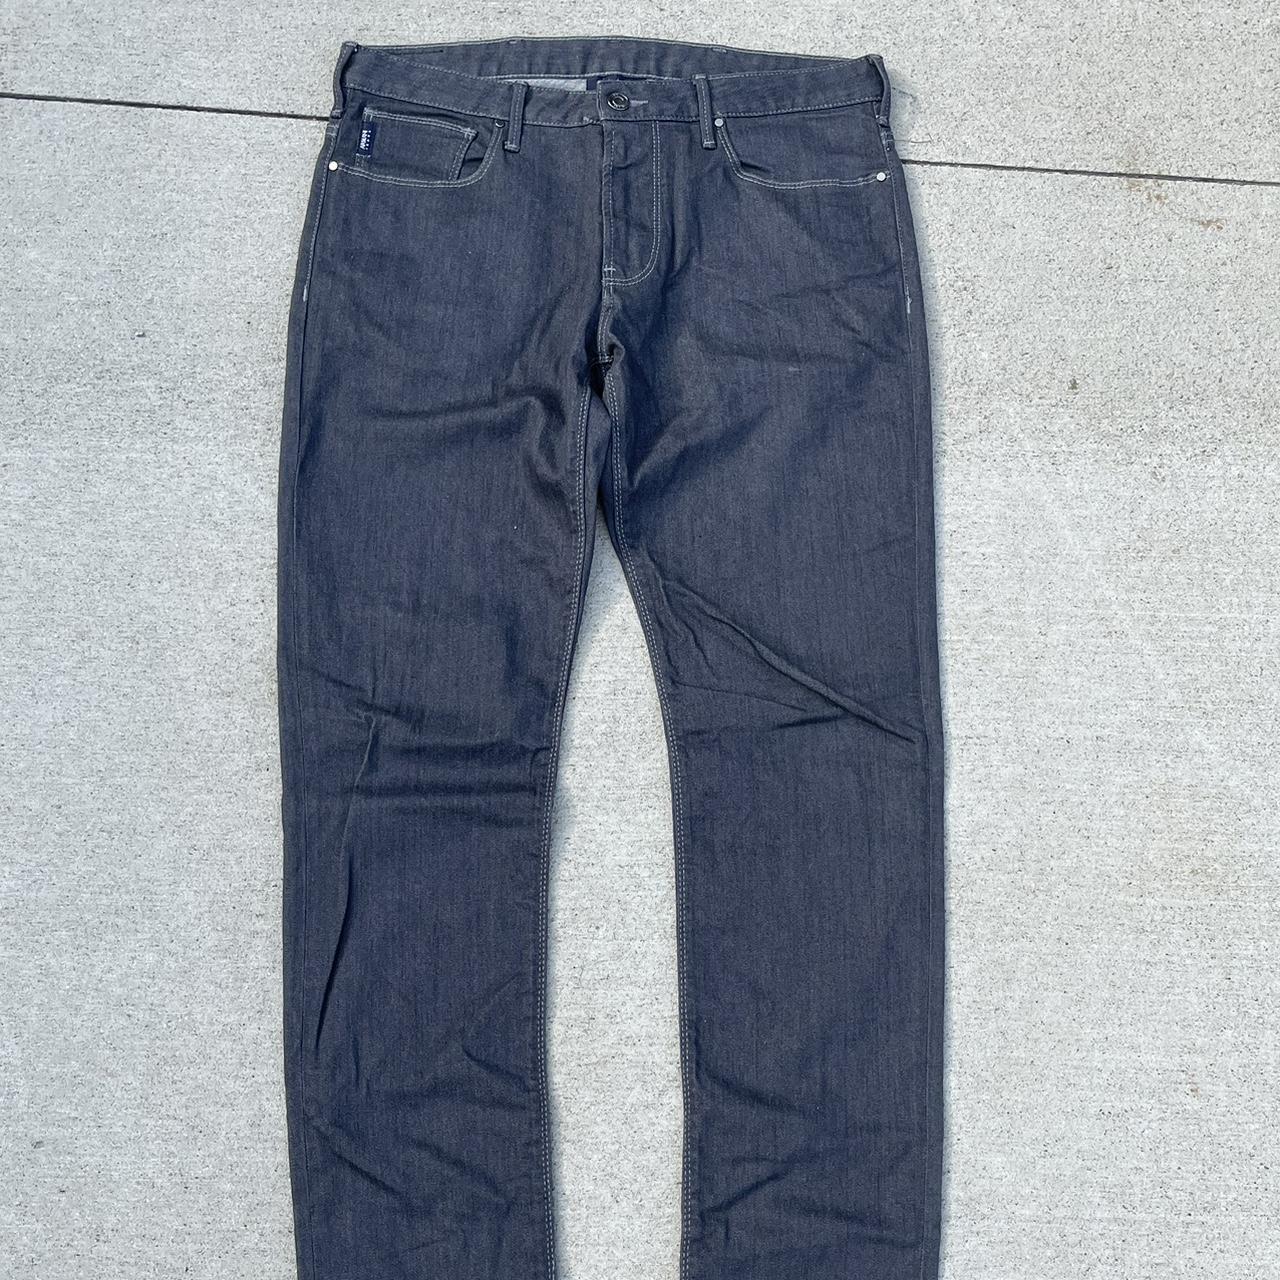 Armani Men's Jeans